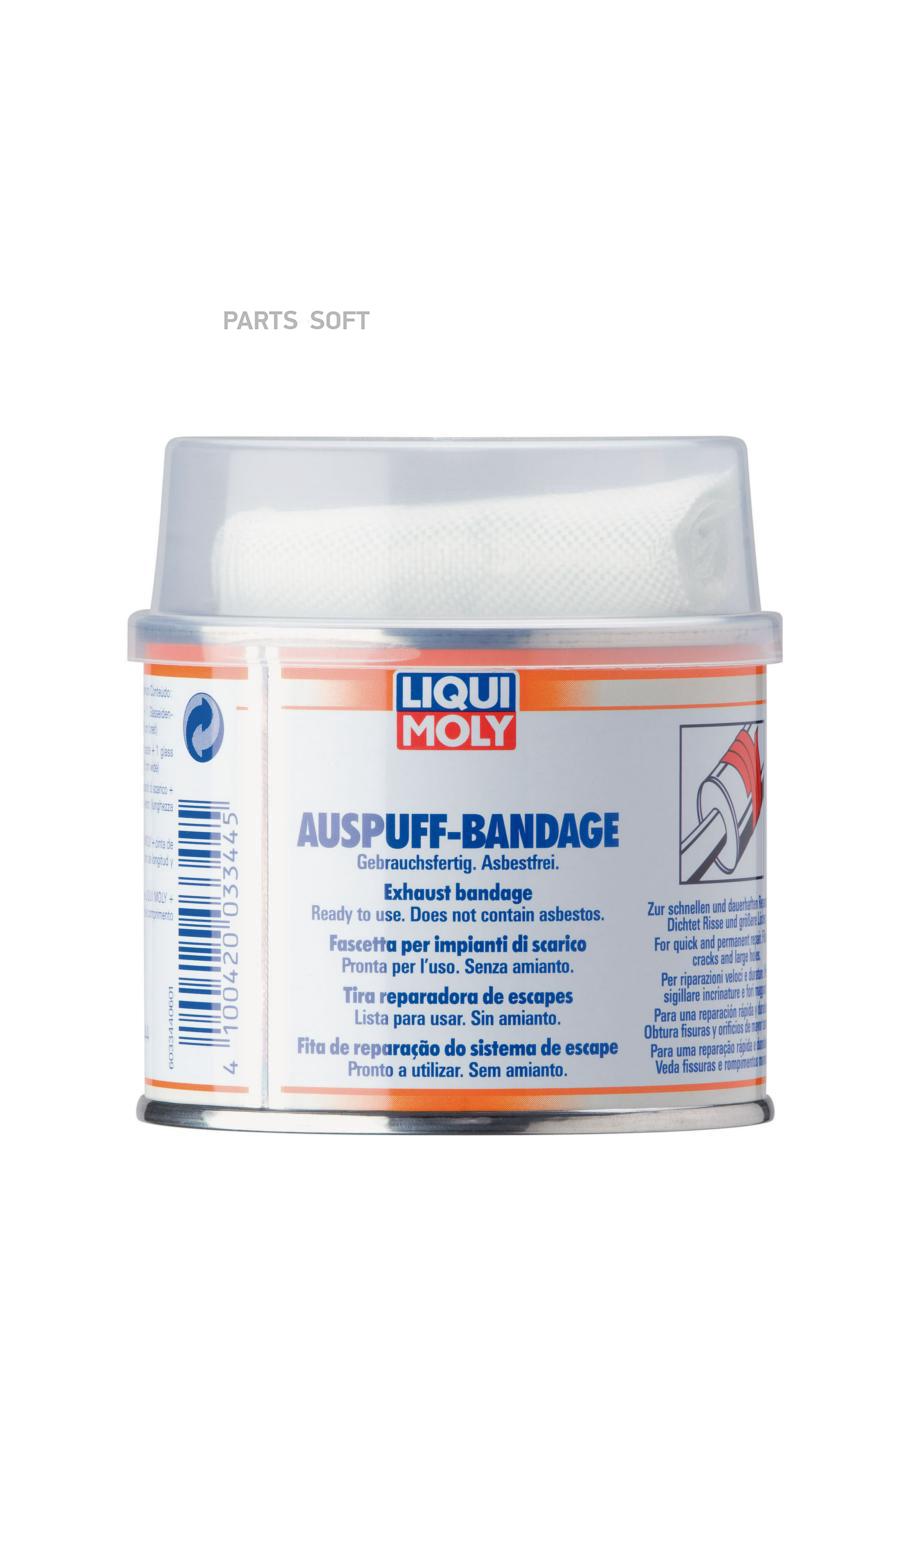 LiquiMoly Auspuff-Bandage gebrauchsfertig_бандаж для ремонта системы выхлопа \